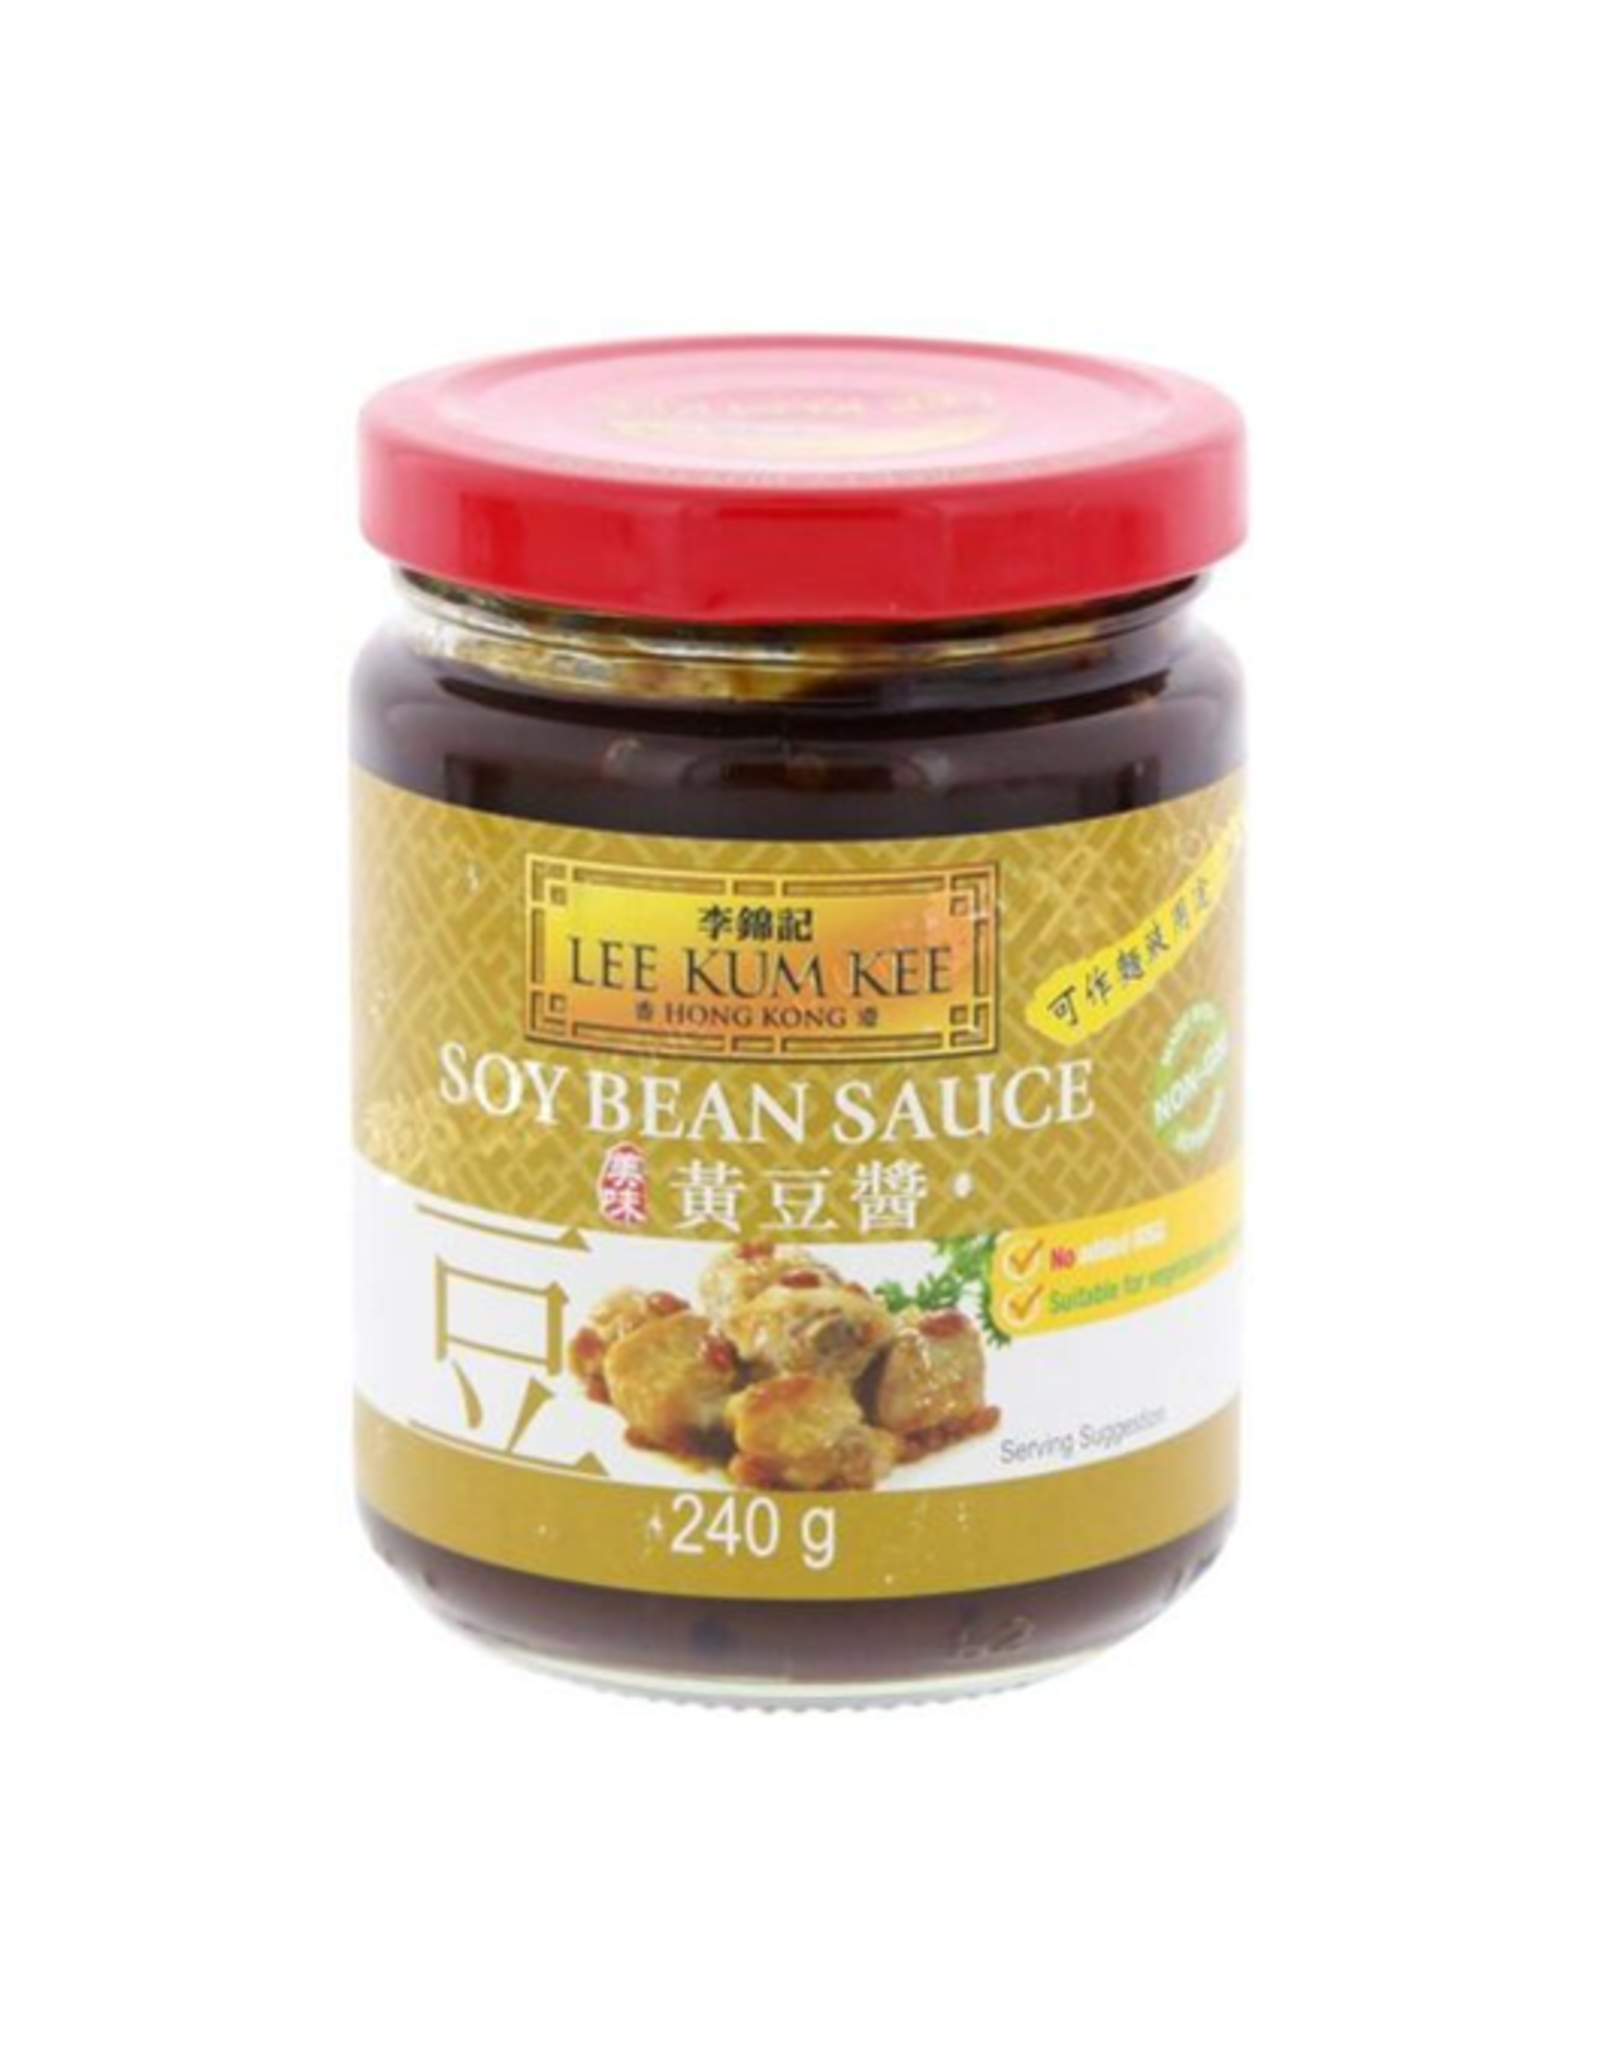 Lee Kum Kee Soy Bean Sauce